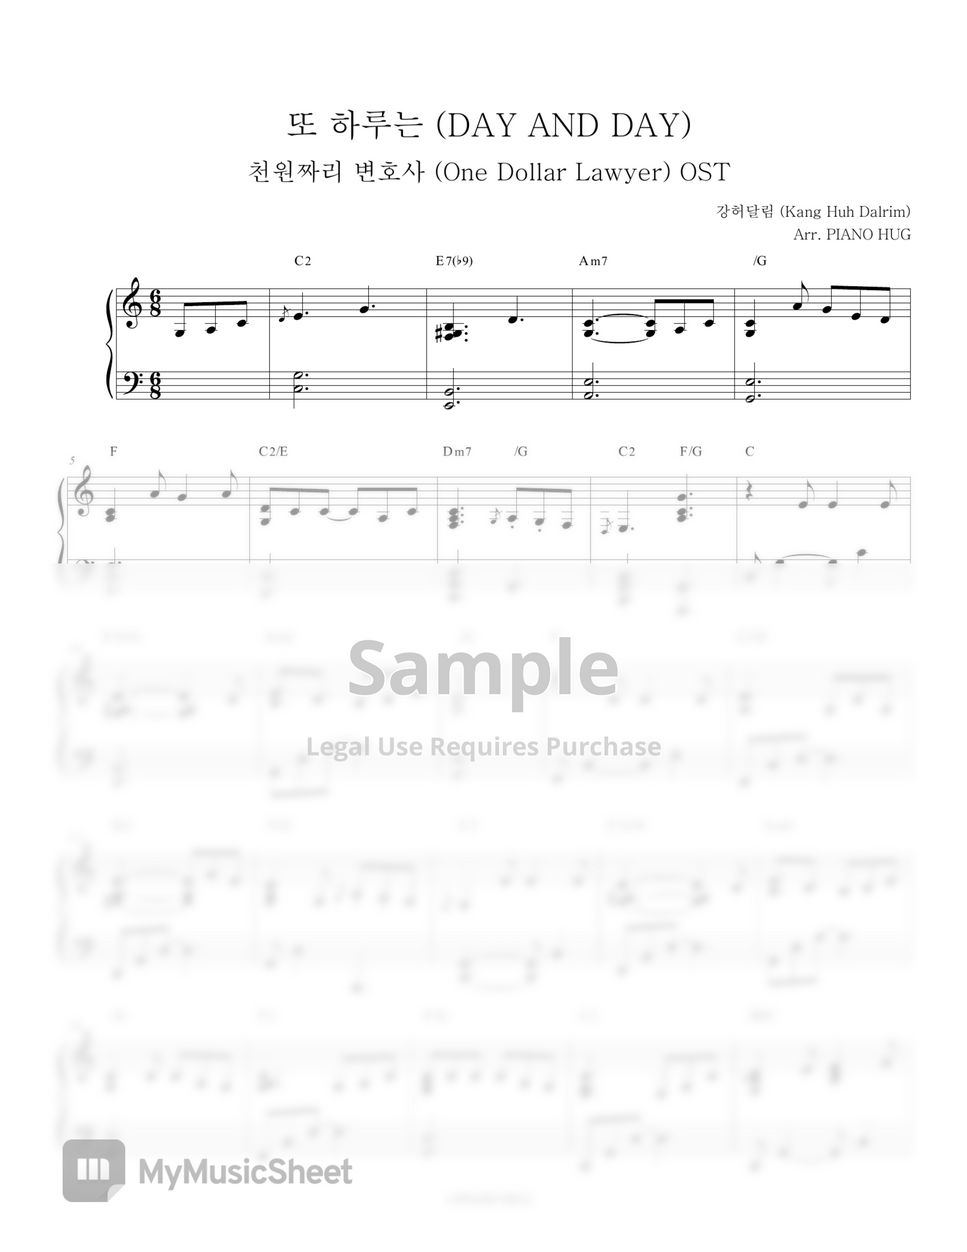 One Dollar Lawyer (천원짜리 변호사) OST - 강허달림 - Day and Day by Piano Hug